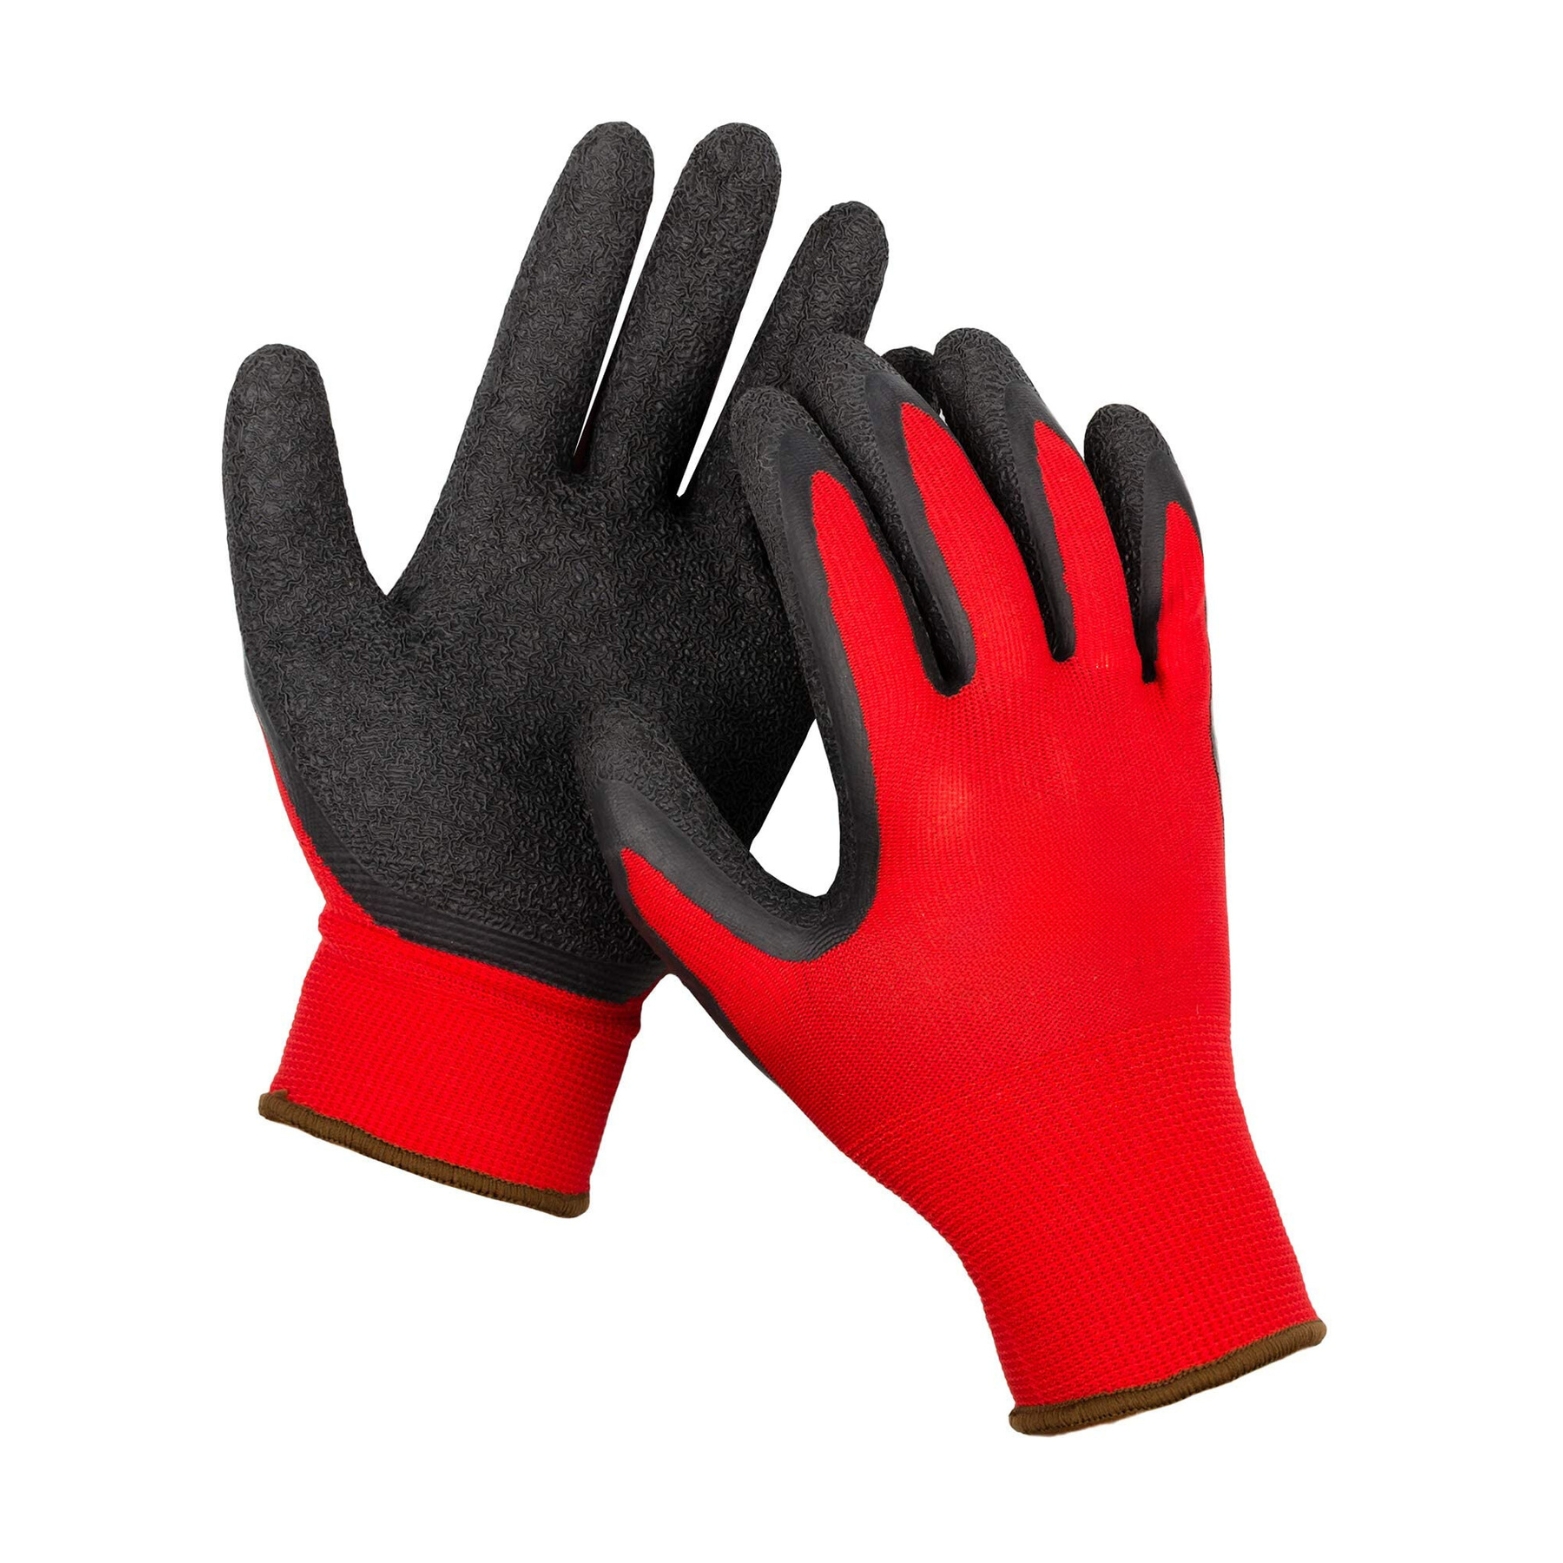 

Extreme Grip Lightweight Rubber Coated Construction Gardening & Mechanics Safety Work Gloves